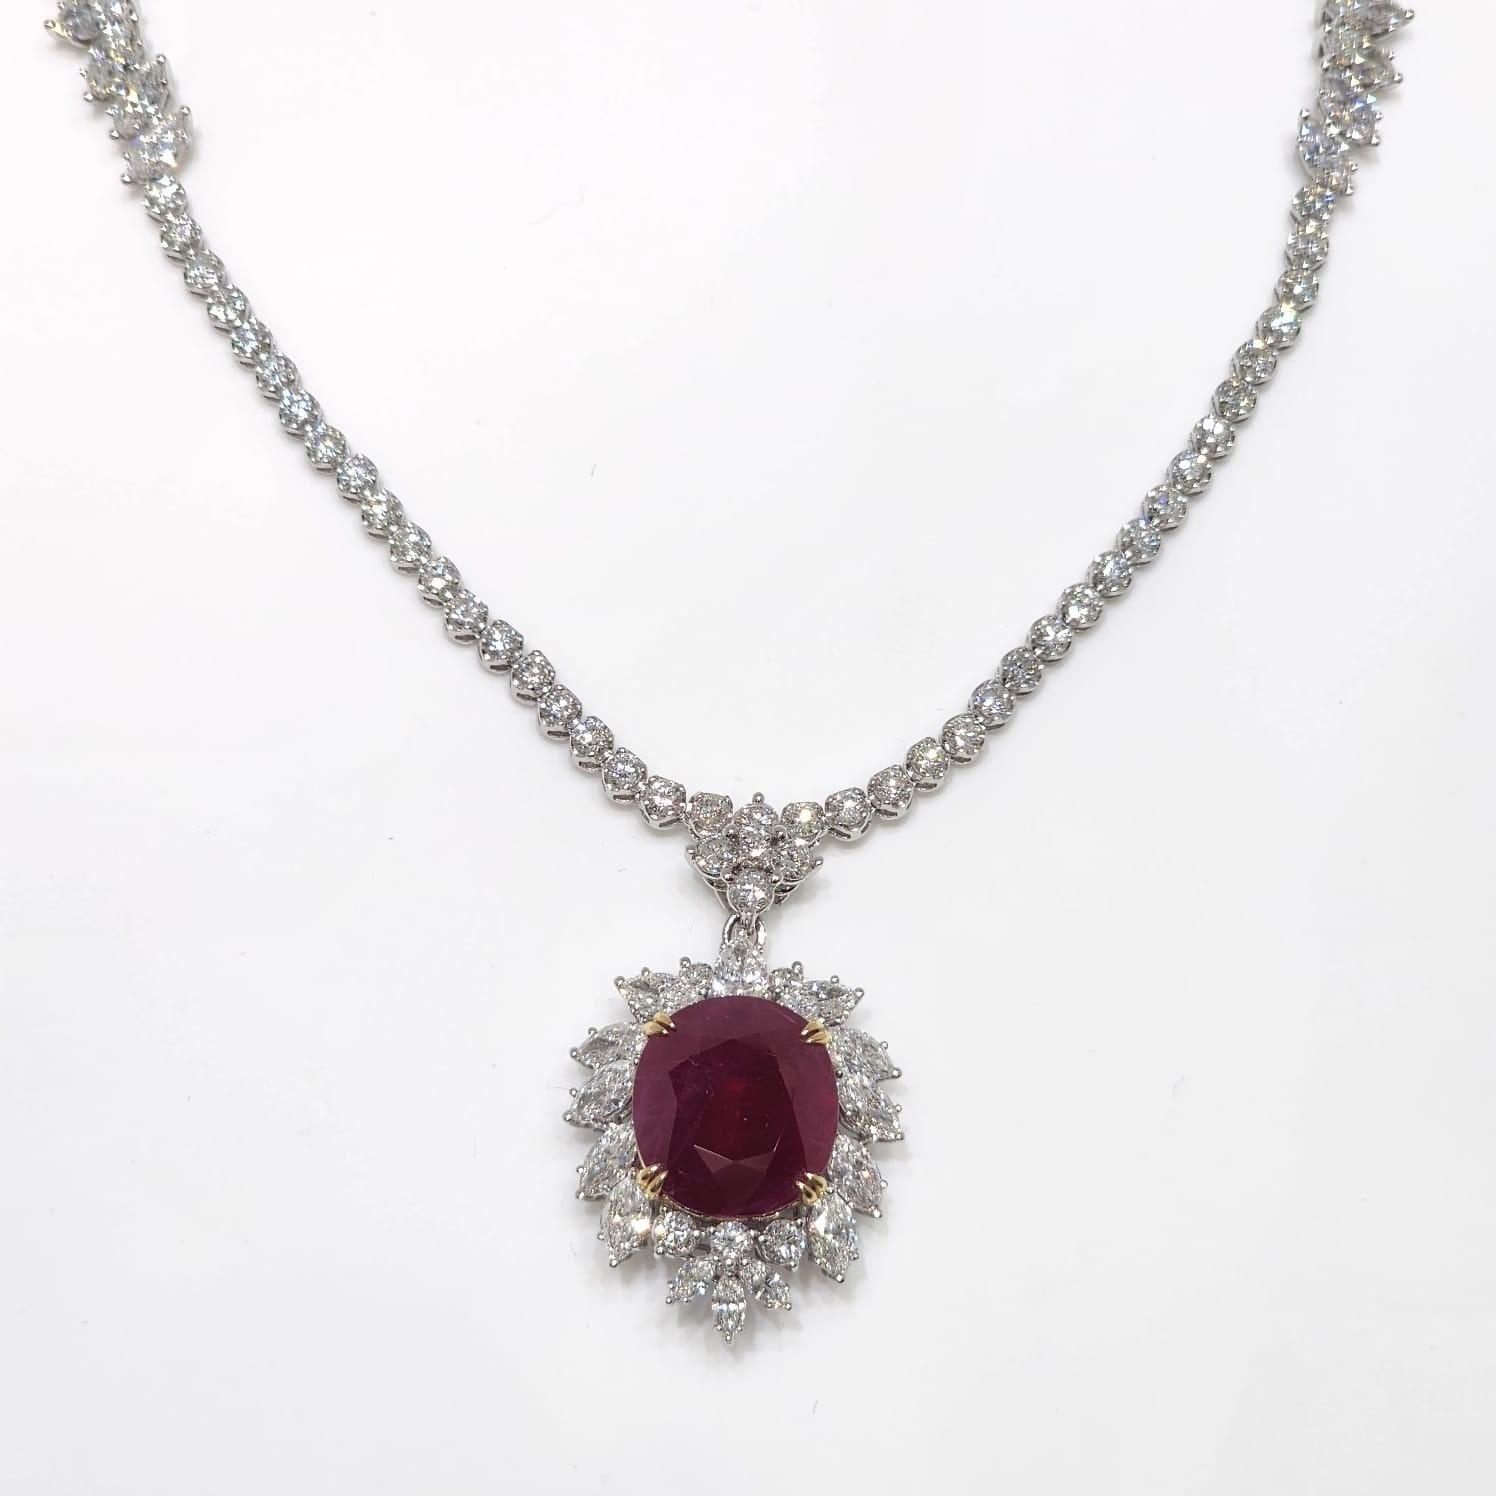 Oval Cut 8.61 Carat Burma Ruby Diamond Necklace in 18 Karat White Gold For Sale